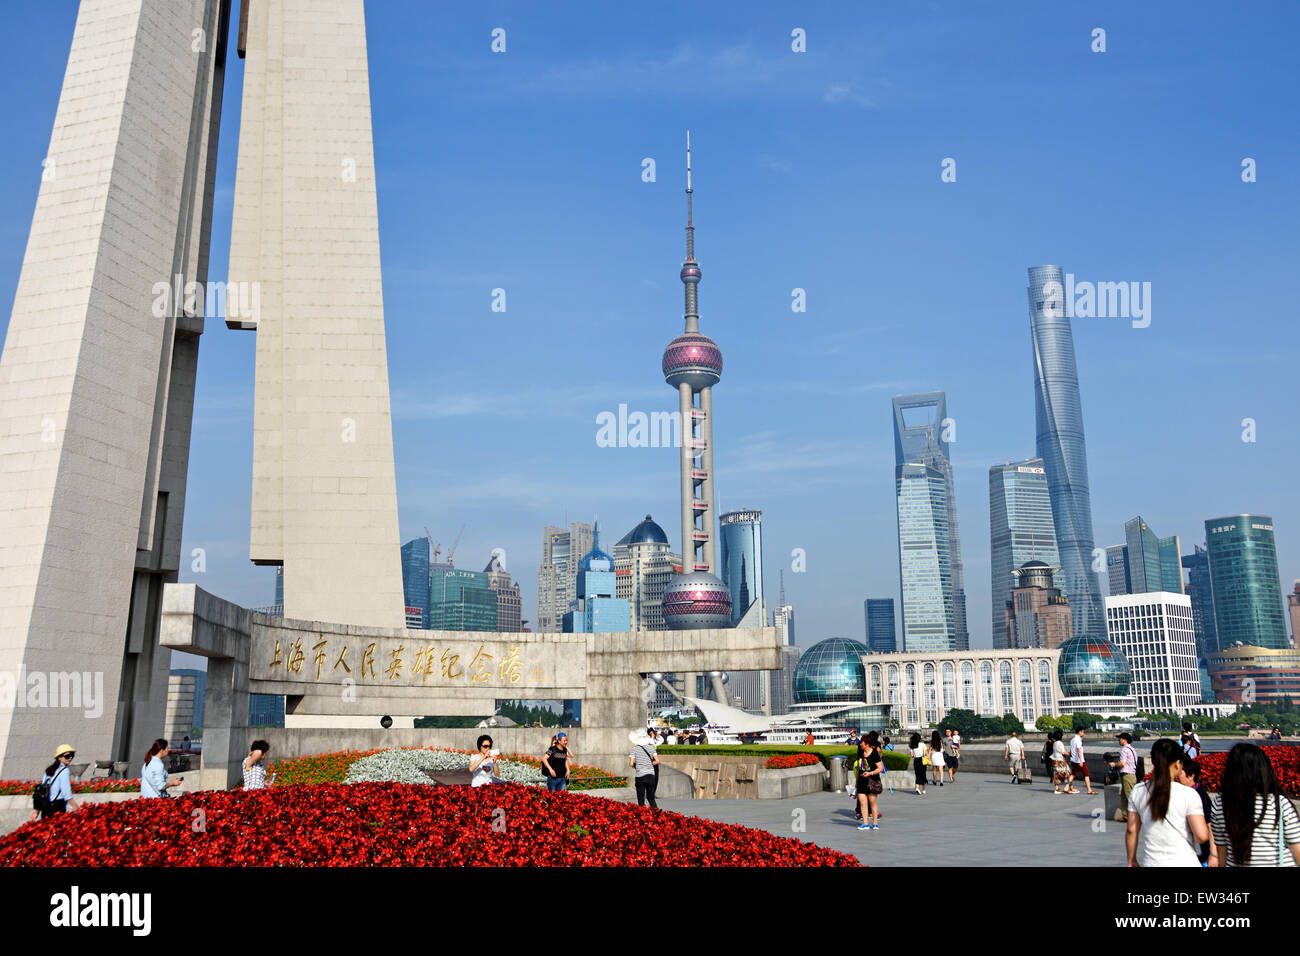 El parque Huangpu Shanghai Pudong Ciudad Oriental Pearl TV Tower, la torre Jin Mao, el World Financial Center, el Río Huangpu Foto de stock